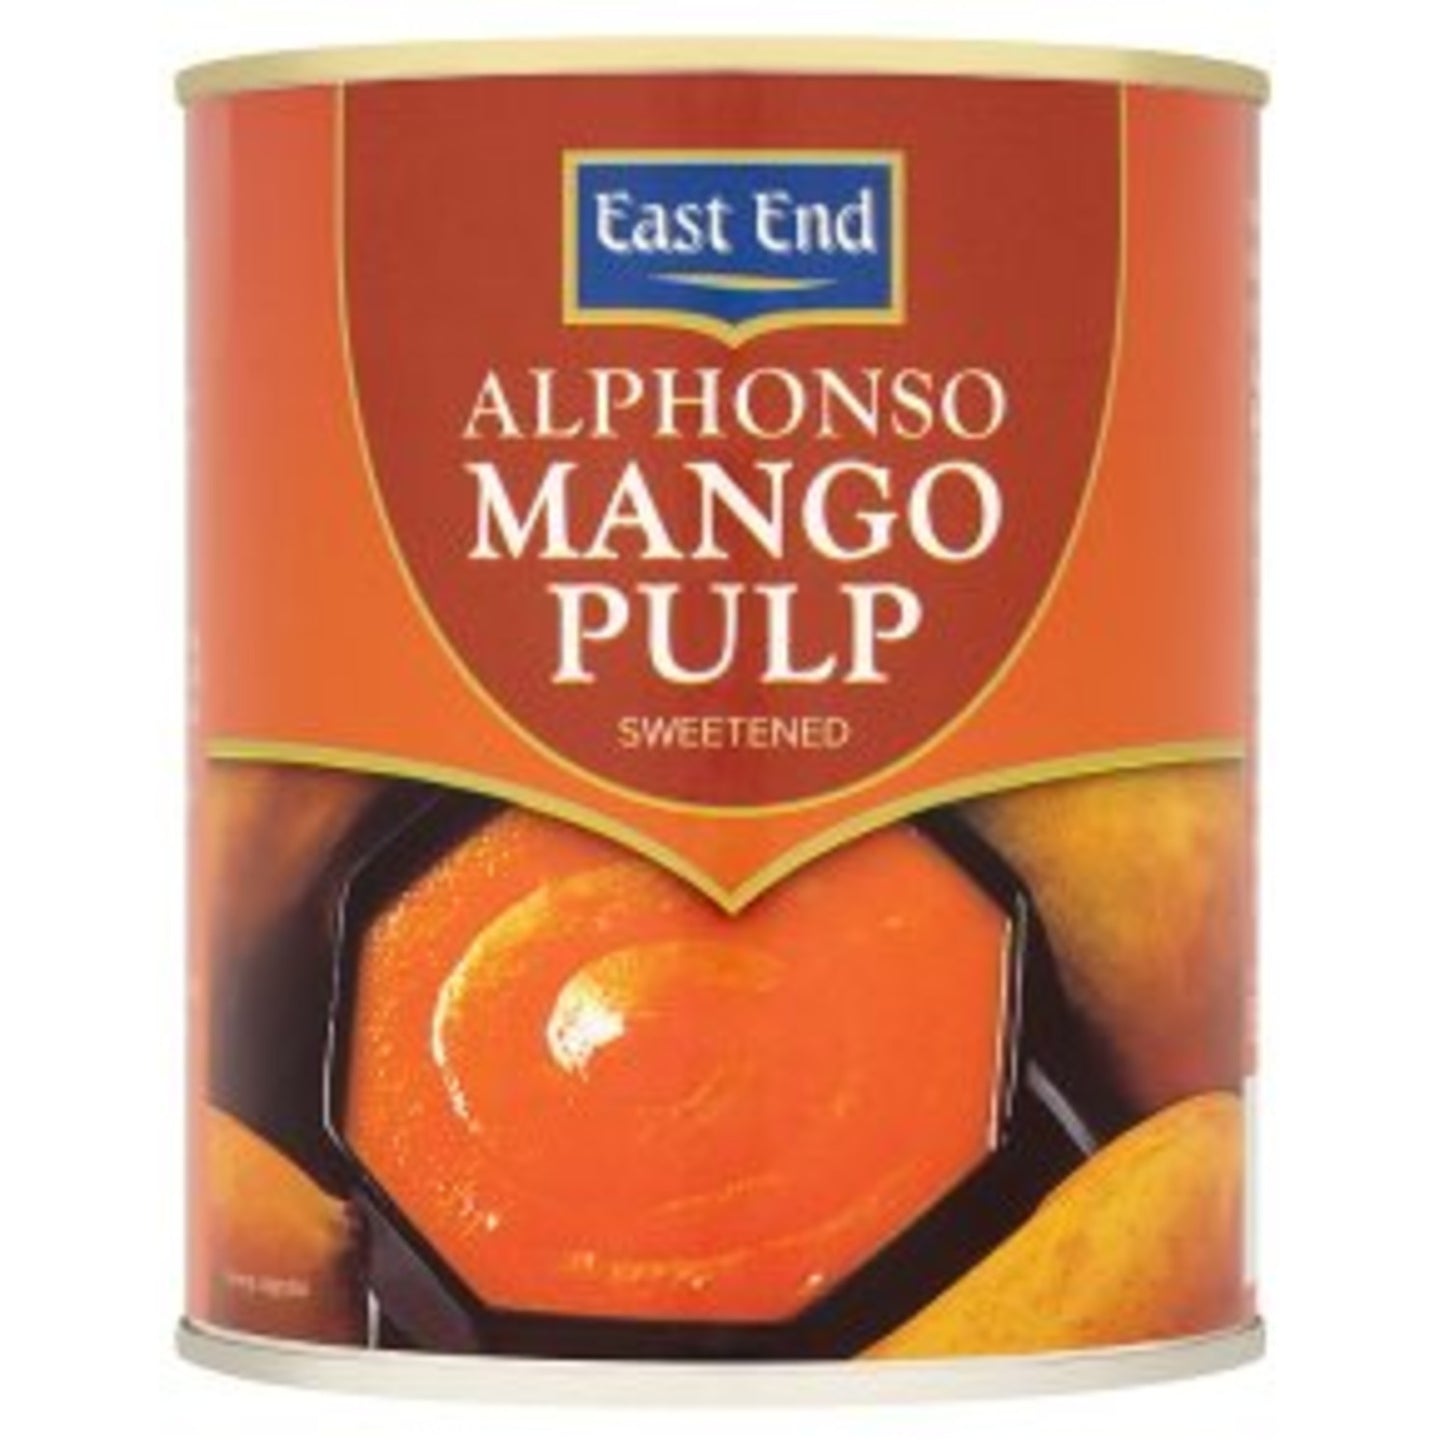 East End Alphonso Mango Pulp (Sweetened) 850g